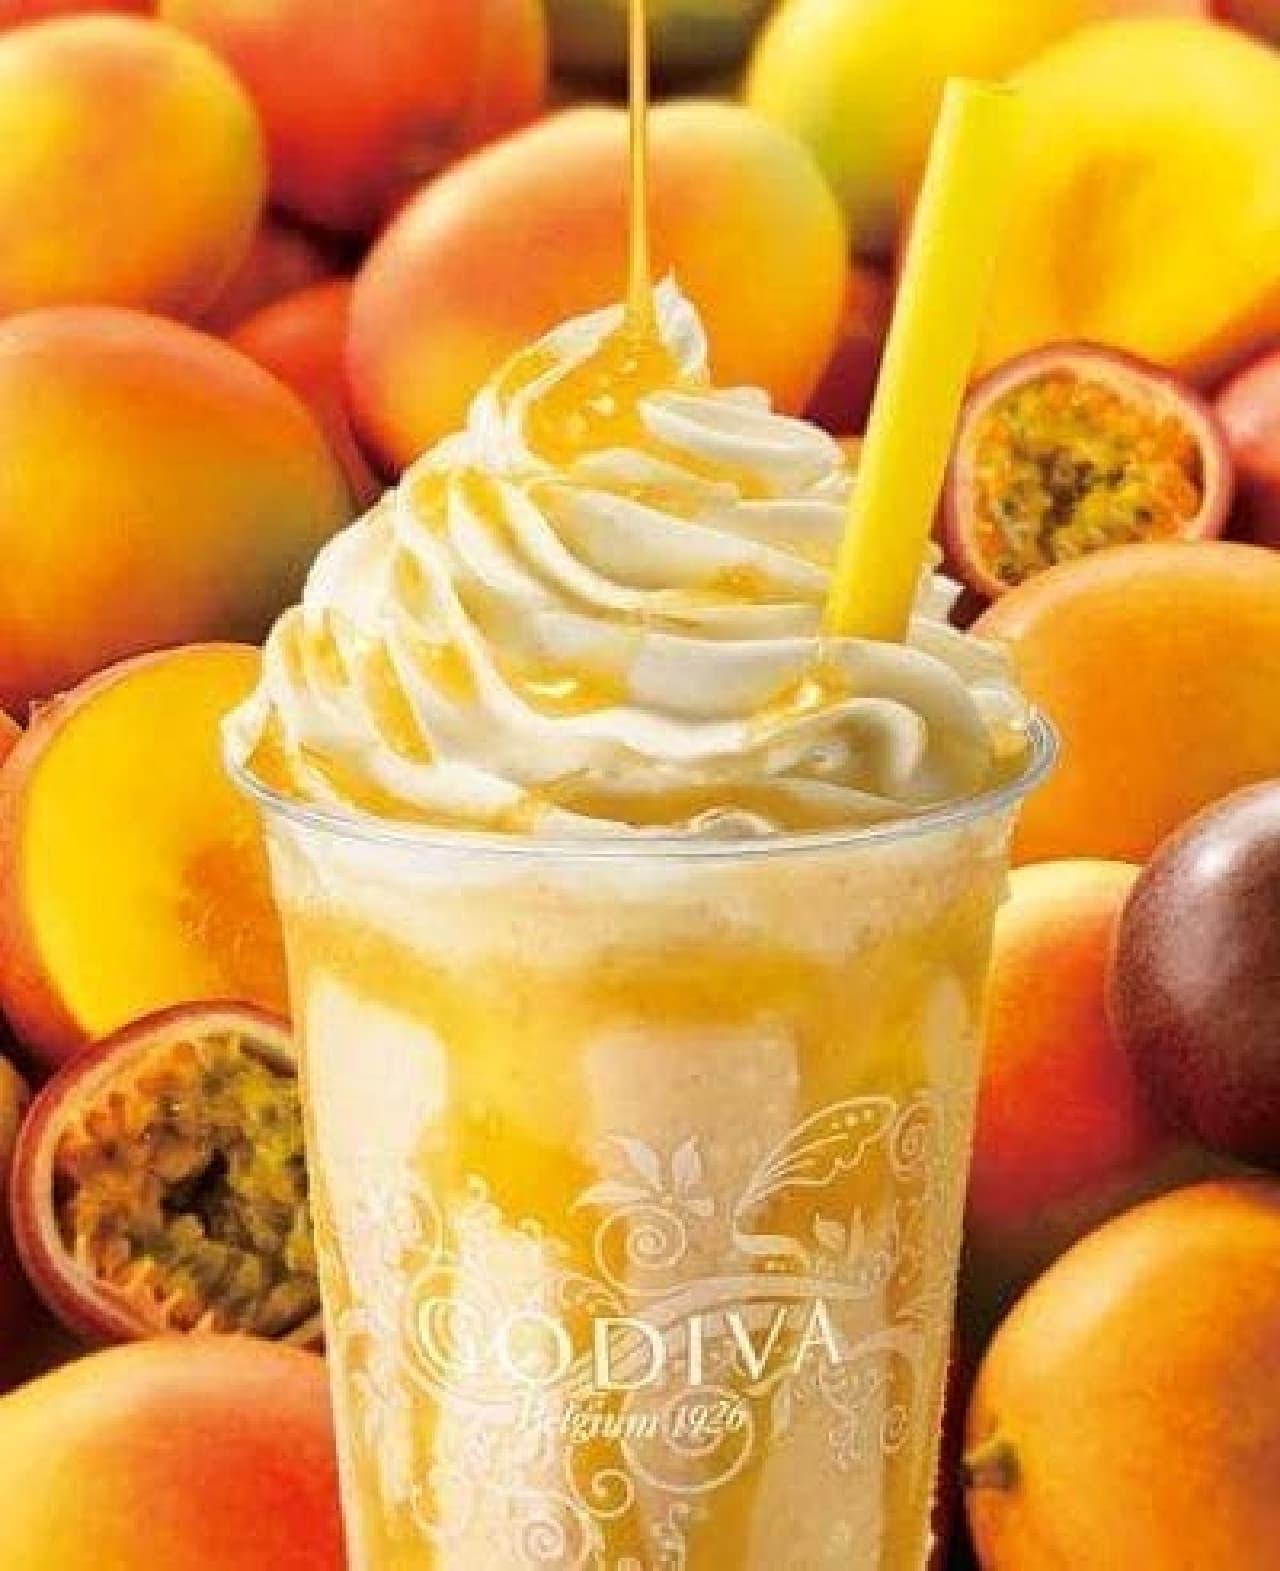 Godiva "Chocolate White Chocolate Mango Passion Fruit"